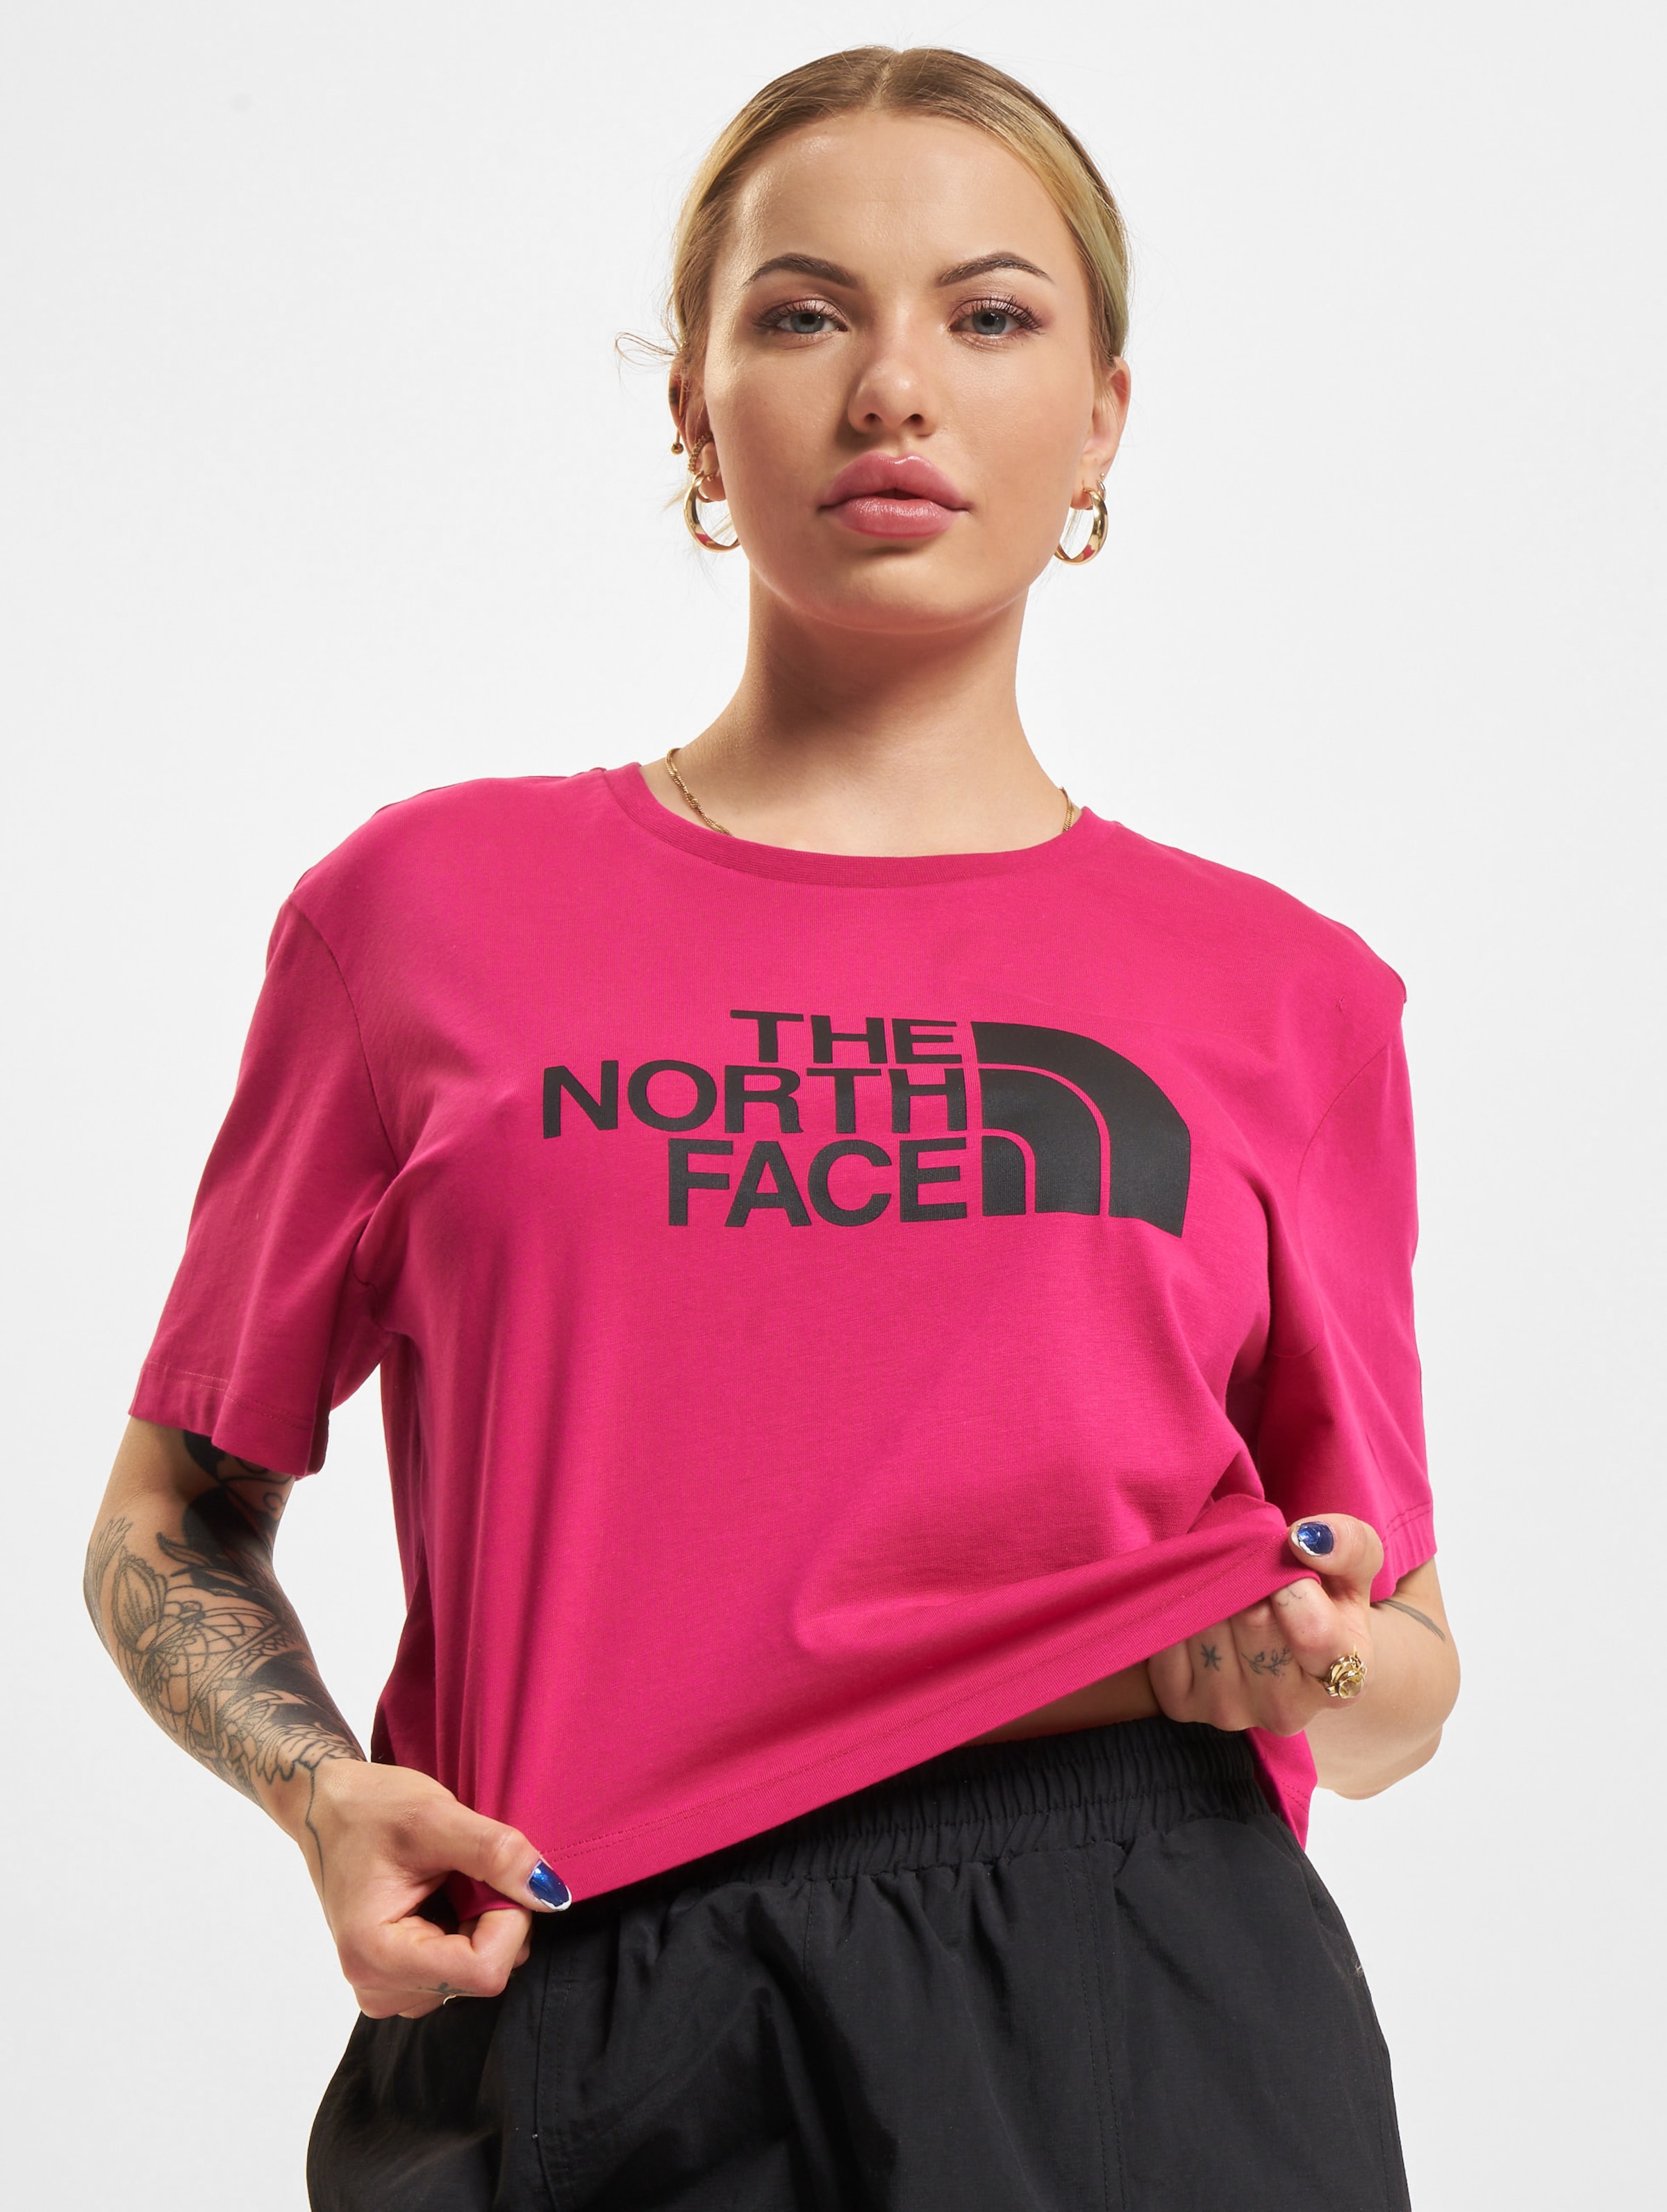 The North Face Cropped Easy T-Shirt Frauen,Unisex op kleur roze, Maat S